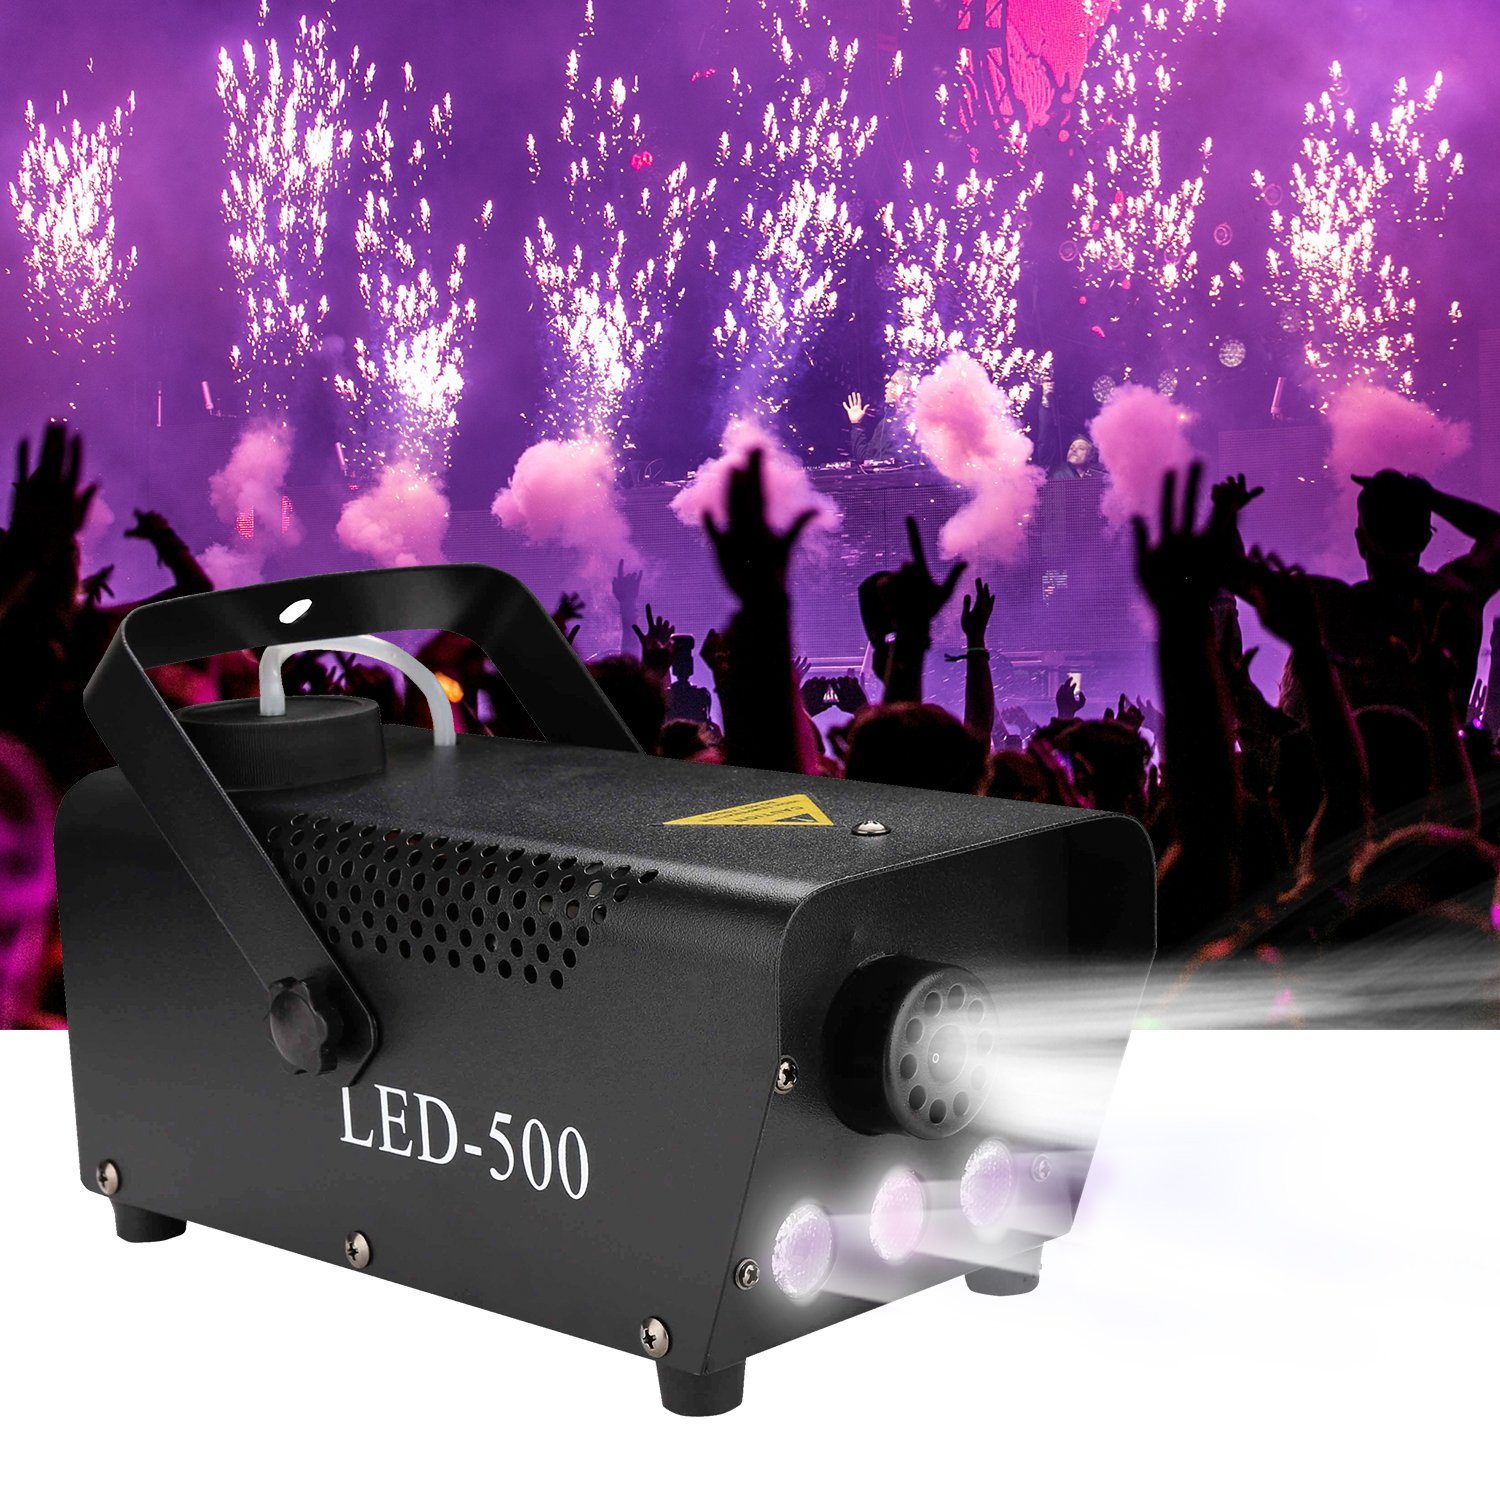 Yakimz LED Discolicht Nebelmaschine mit RGB, Rauchmaschine 500W LED, Bodennebelmaschine